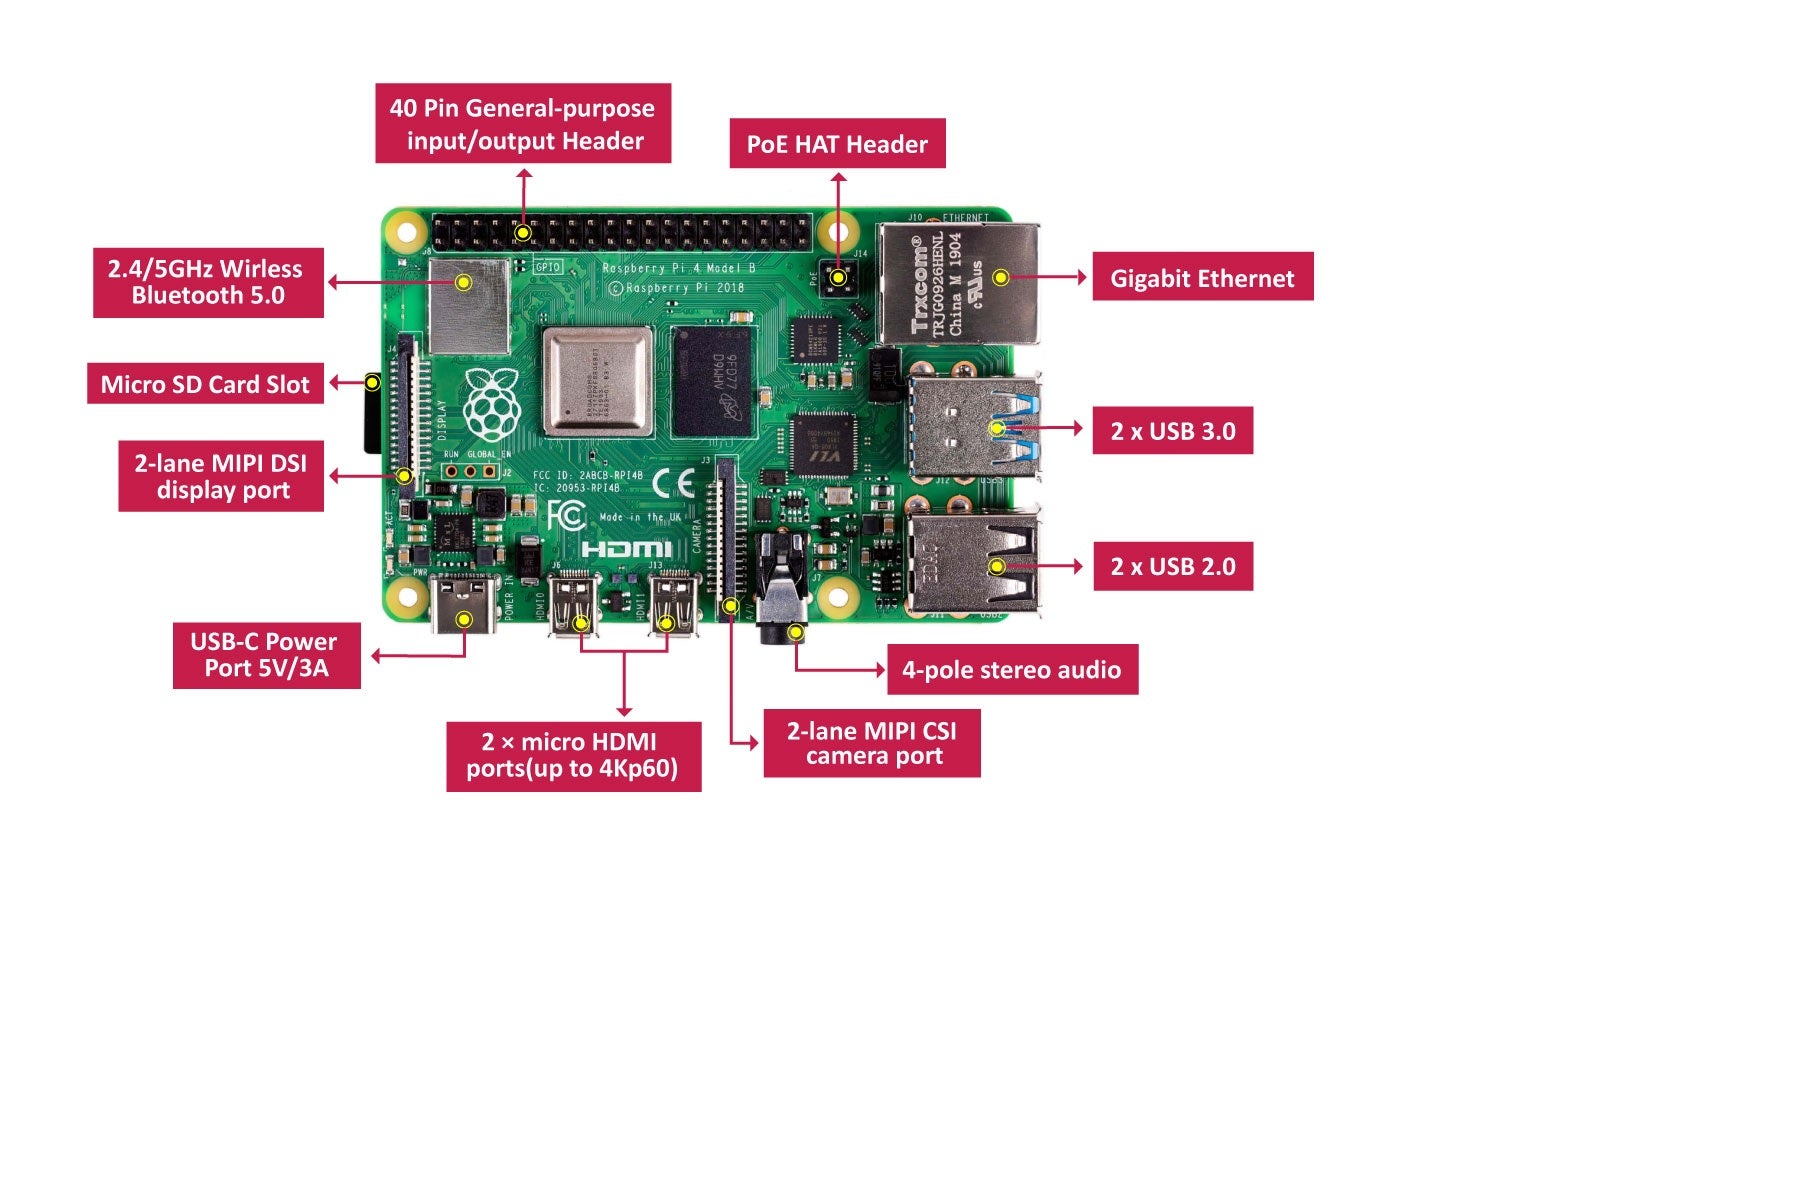 Raspberry Pi 4 Model B / 4GB RAM – EletechSquare